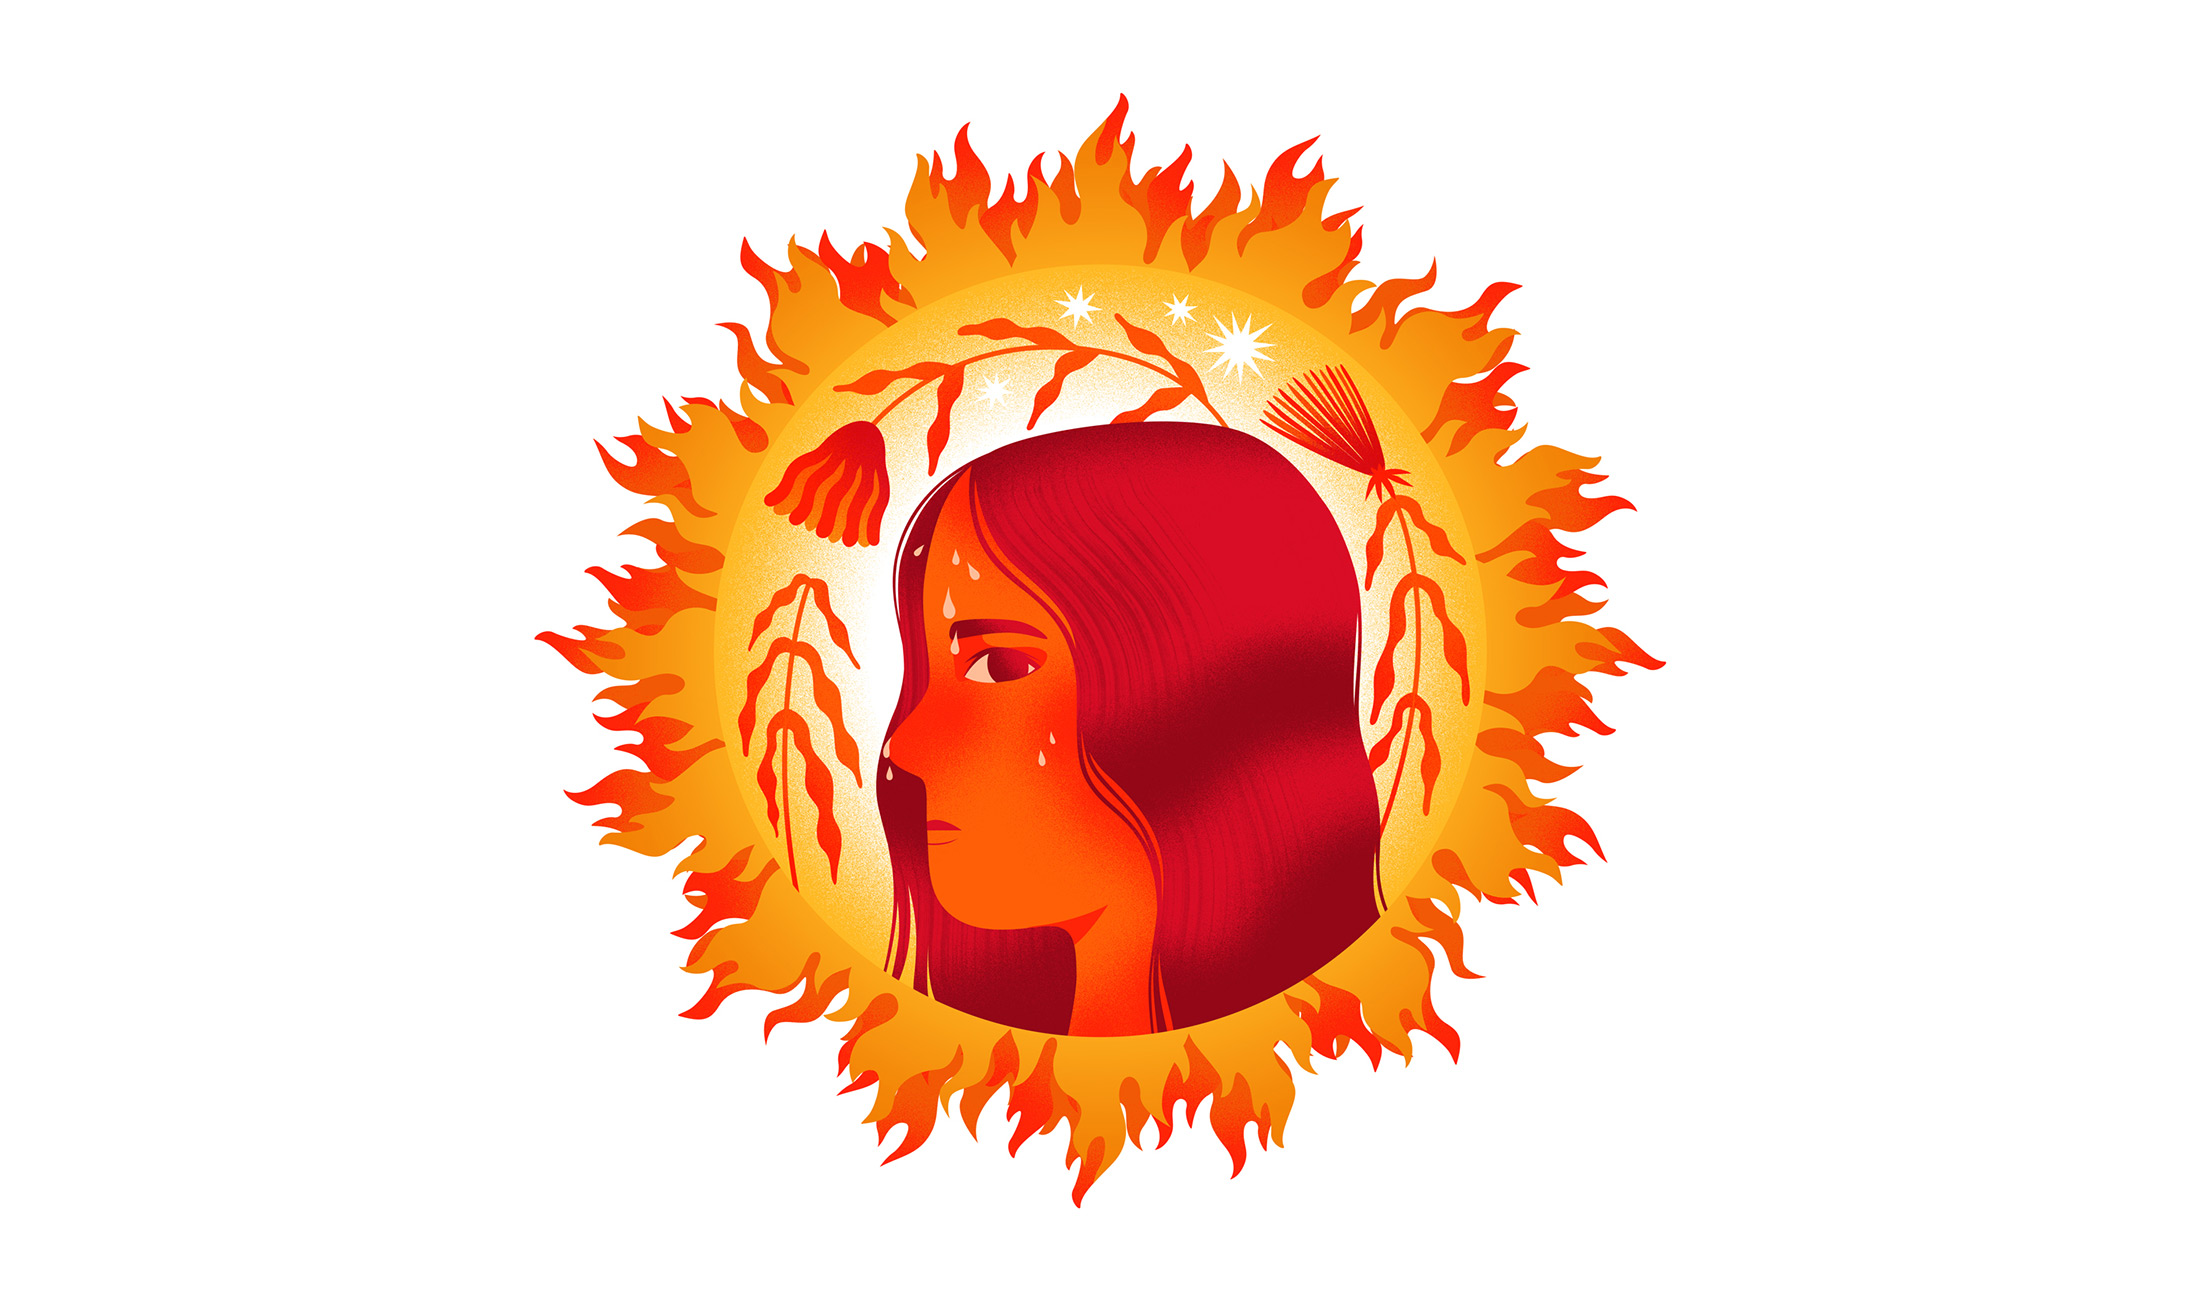 Heatwave illustration 2020